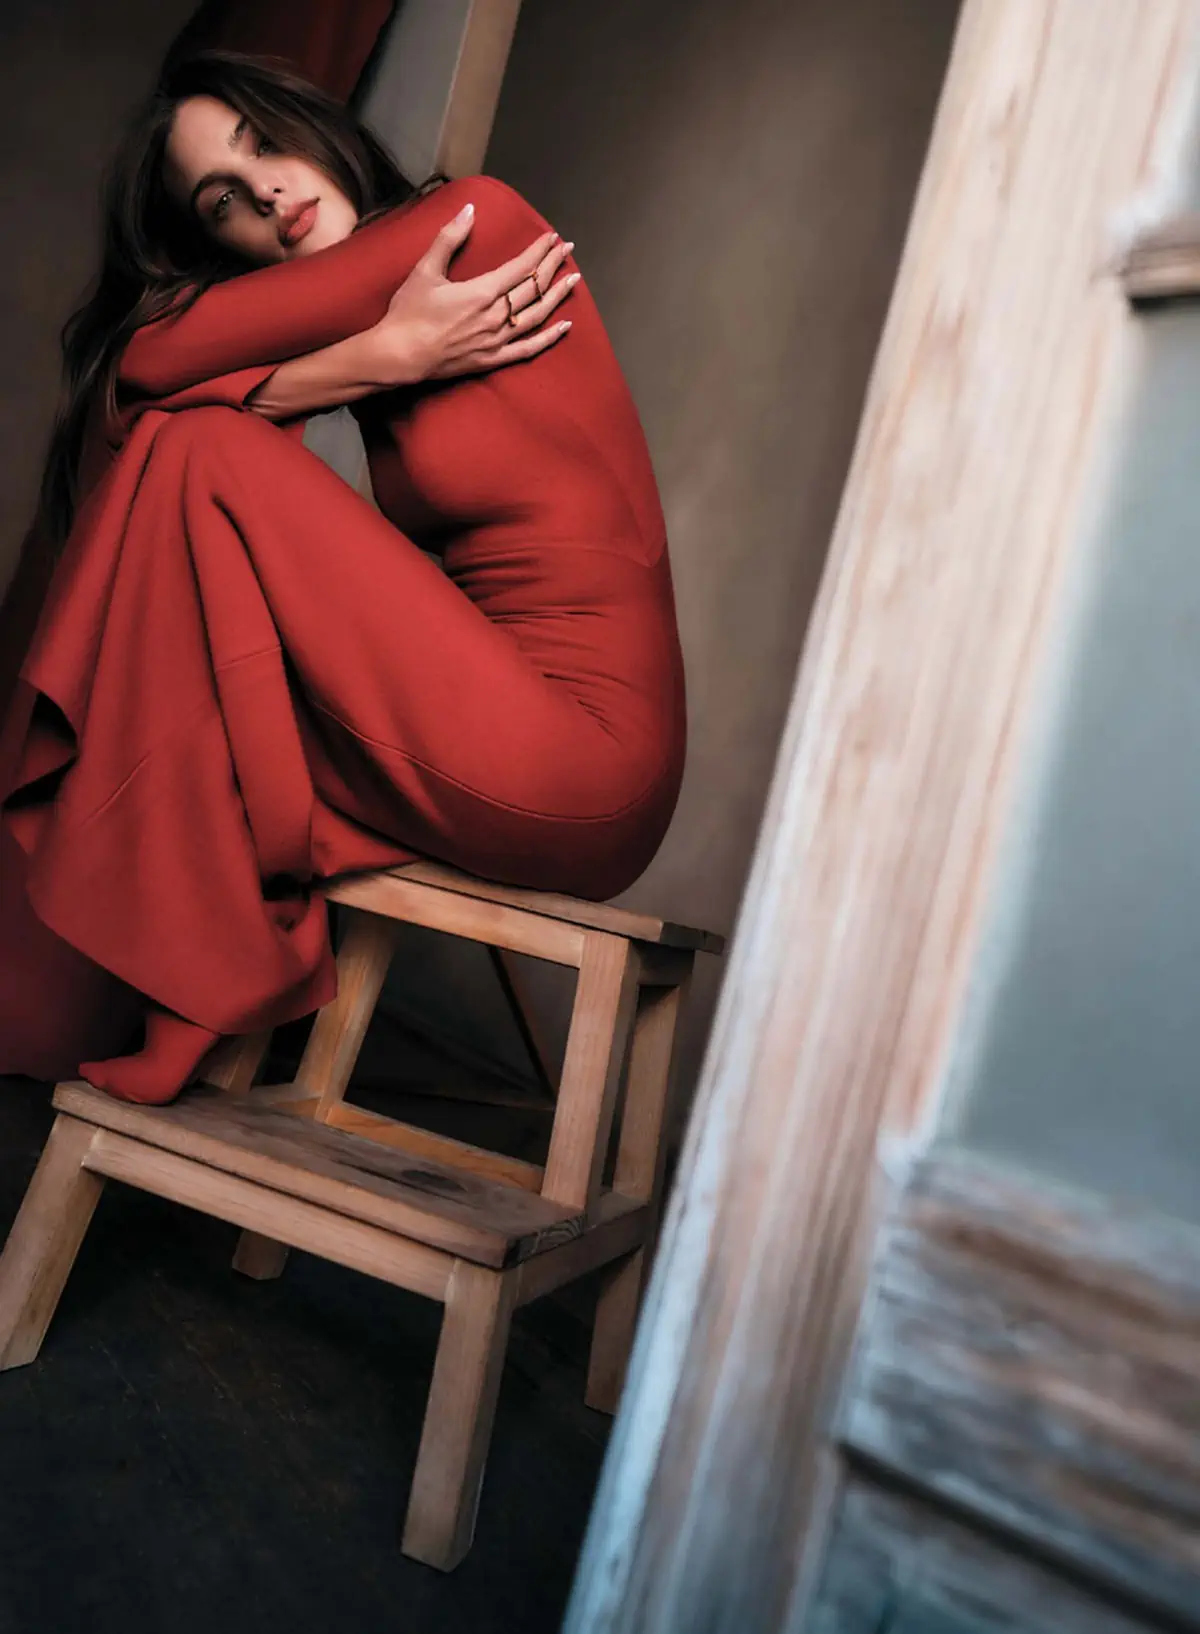 Macarena Achaga covers Vogue Mexico February 2023 by Enrique Leyva